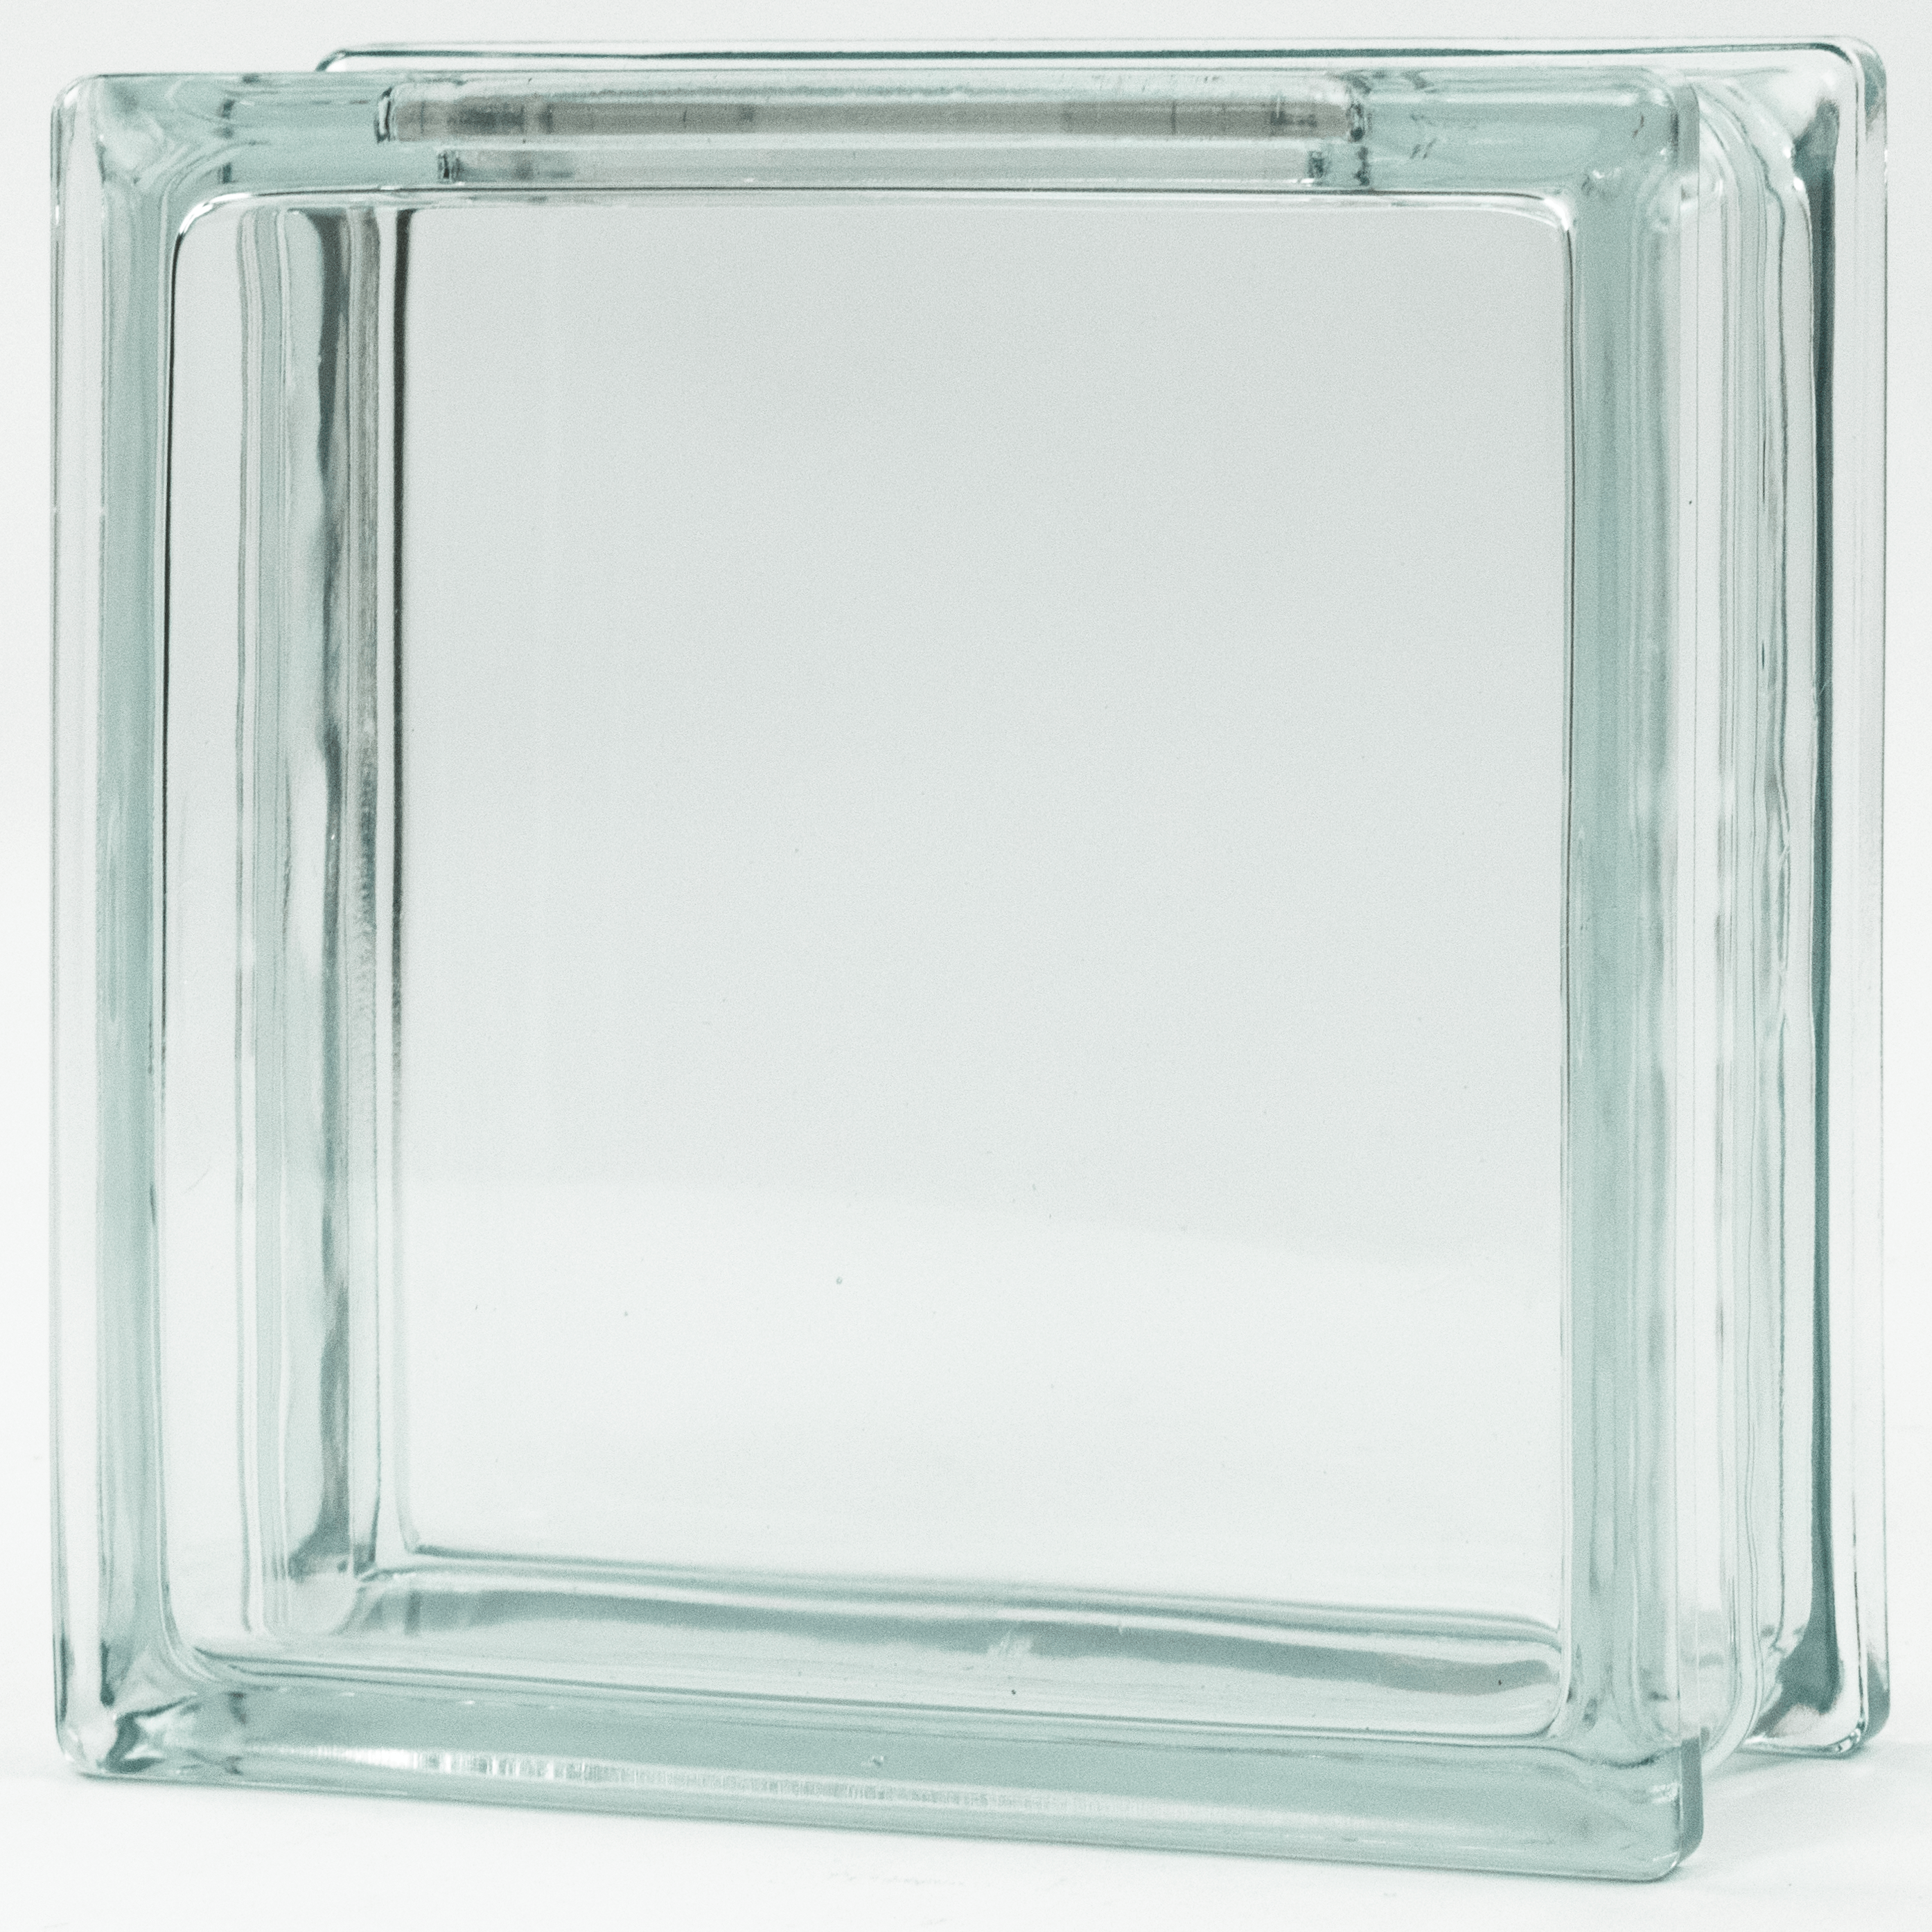 Mulia Inc - 8 X 8 X 3 Nominal Decorative Hollow Clear Craft Glass Block  in Clear Pattern, 5 Pcs/Bx